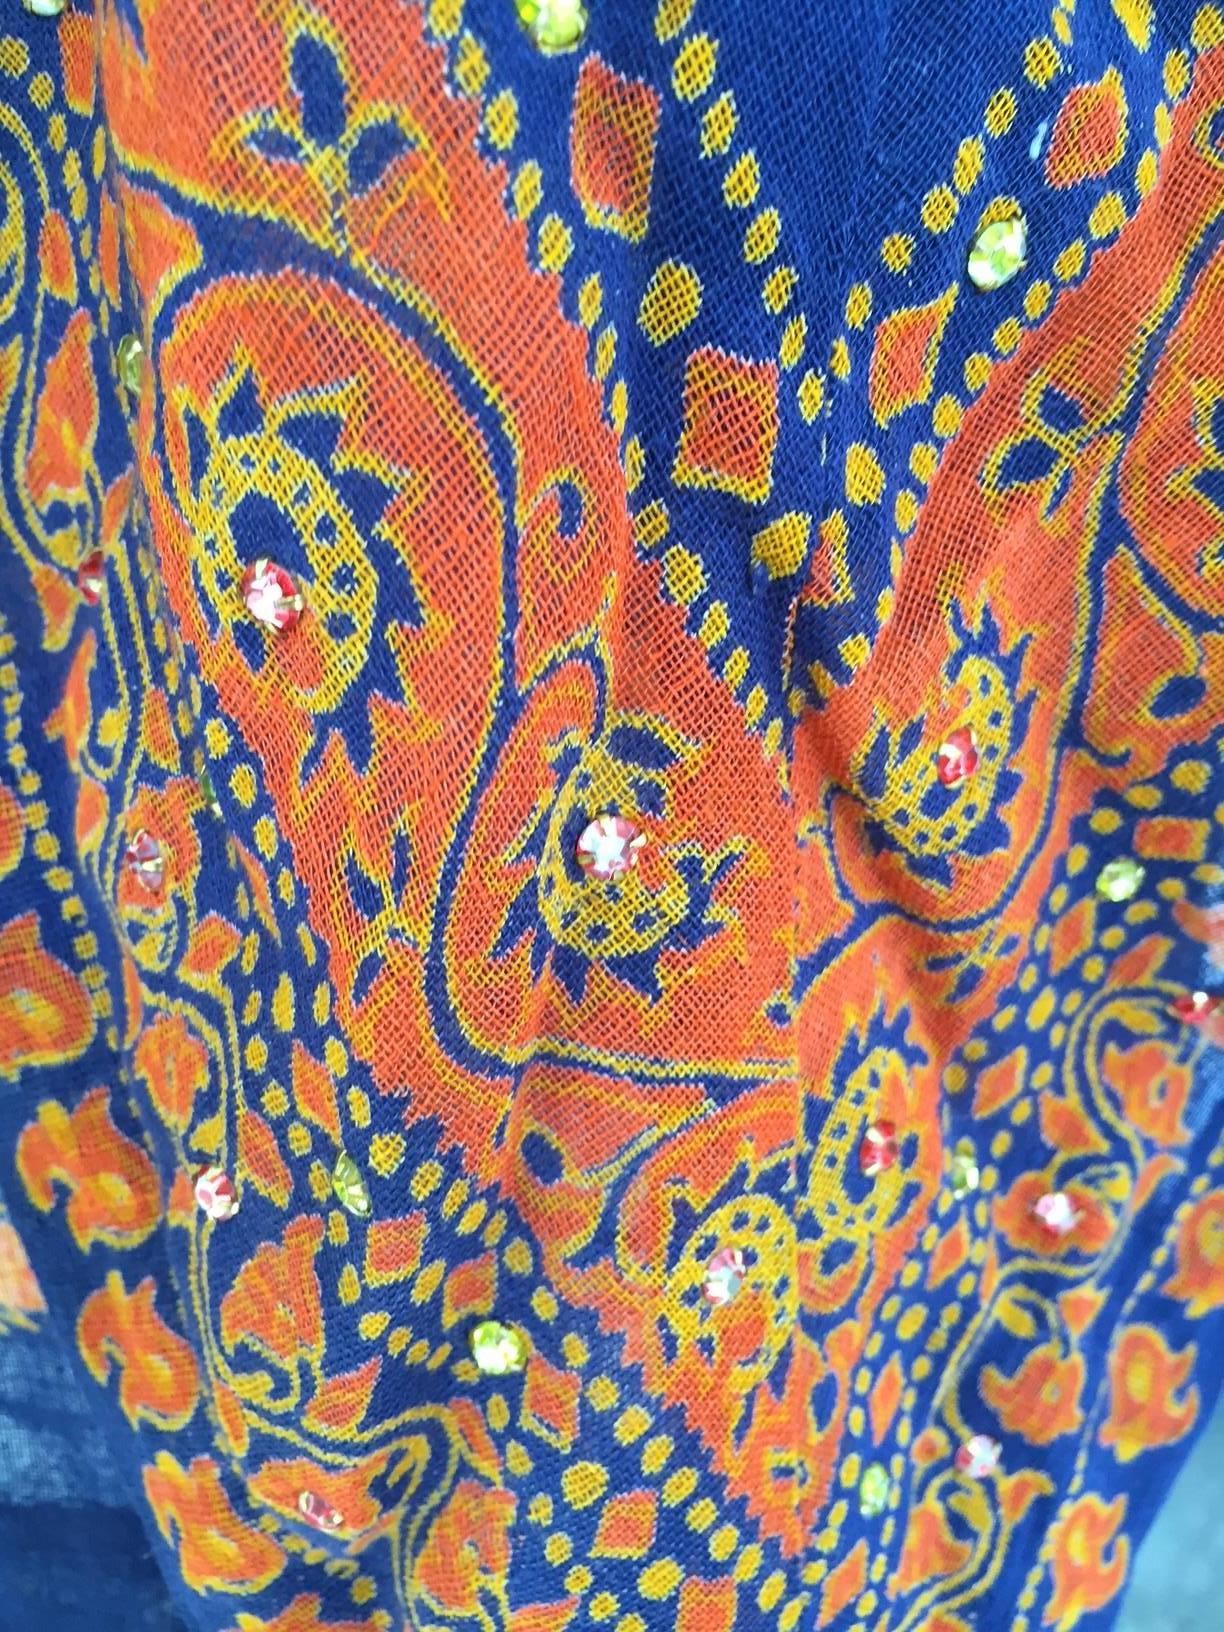 Vintage one shoulder Anne Forgarty 70s Cotton Gauze print dress.
color: blue and orange. some rhinestones.
Bust: 36